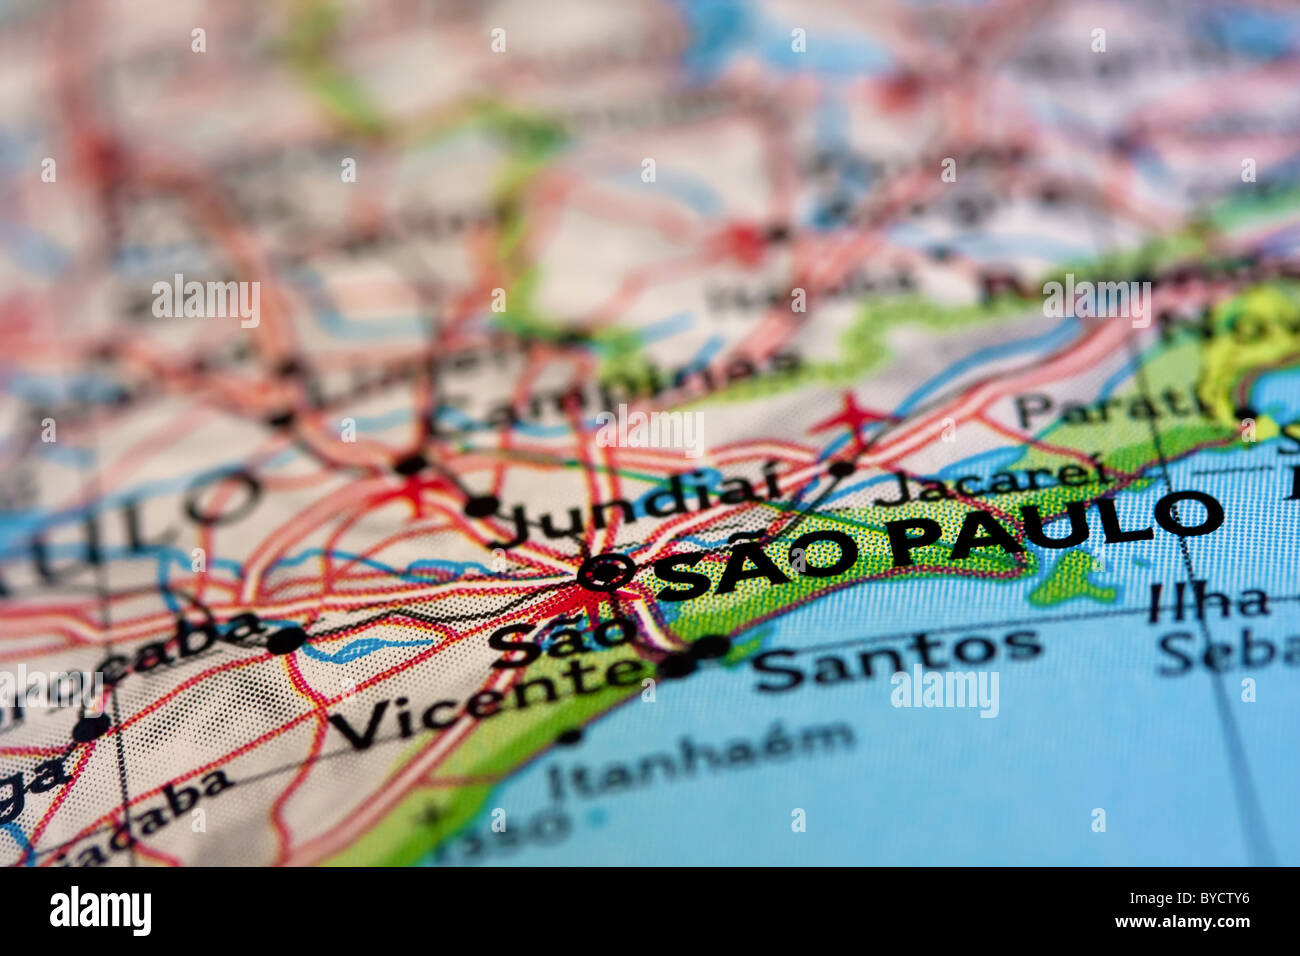 Sao Paulo on the map Stock Photo